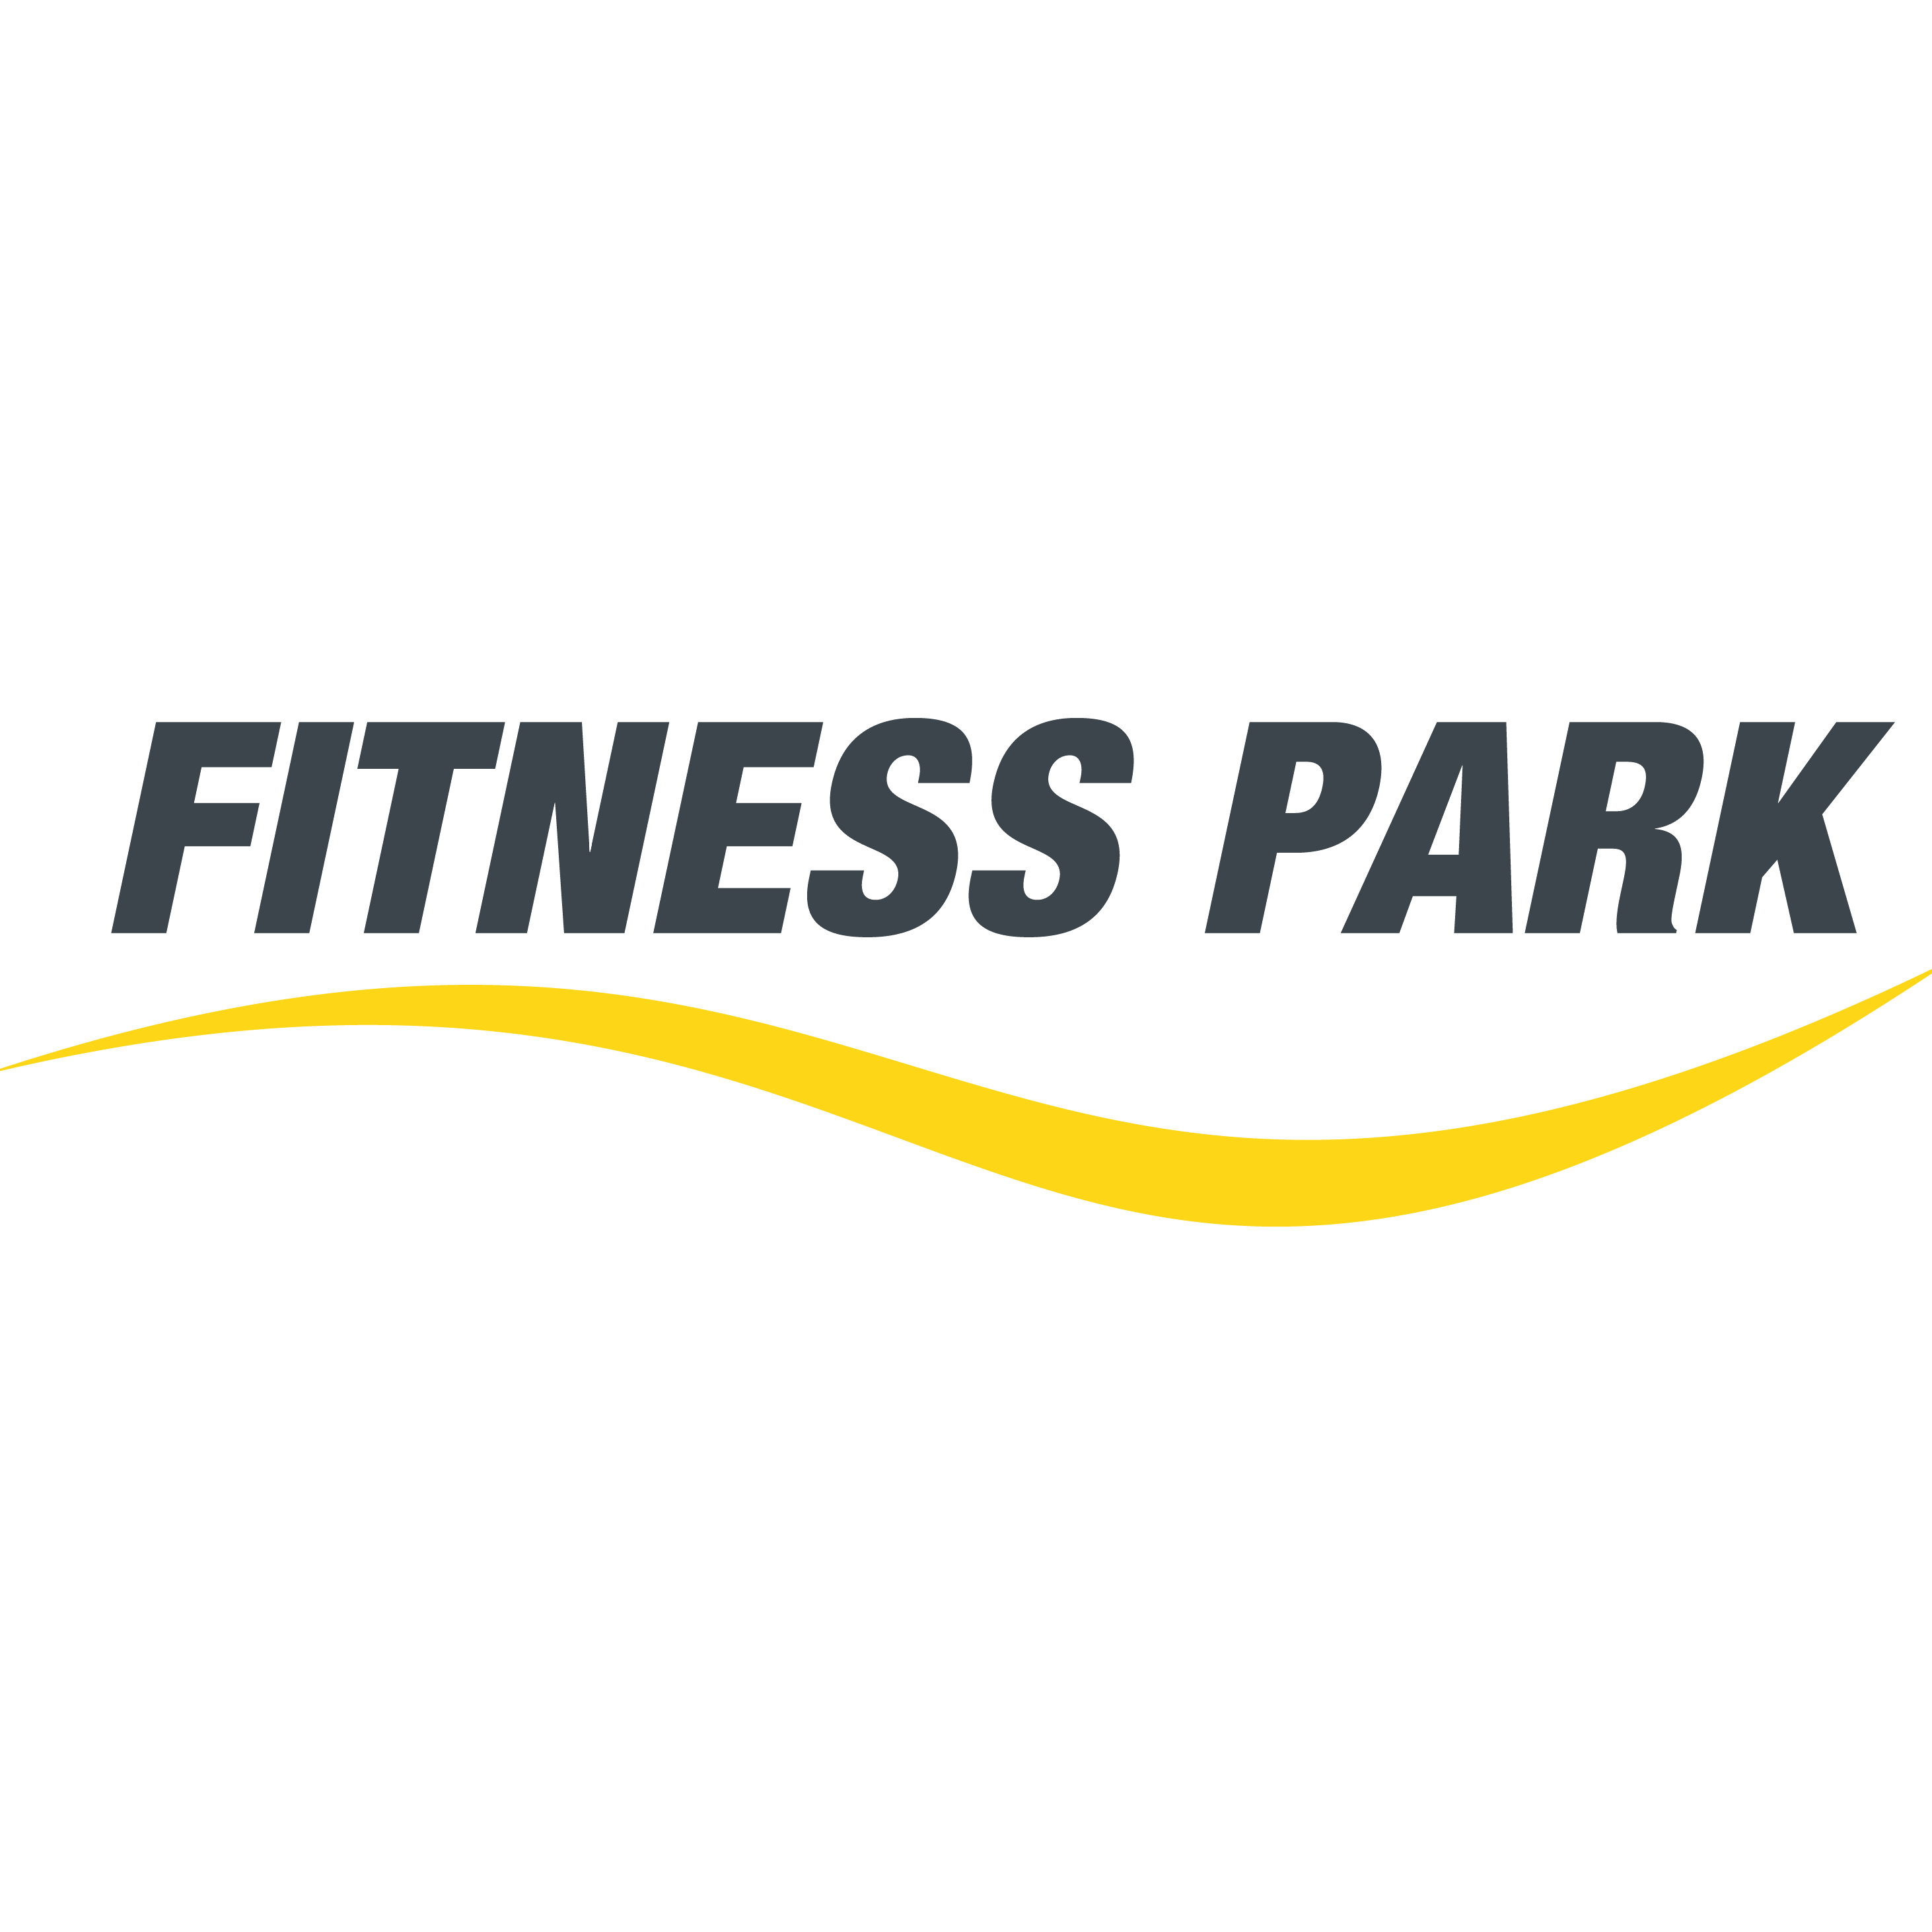 Fitness Park : Fitness Park